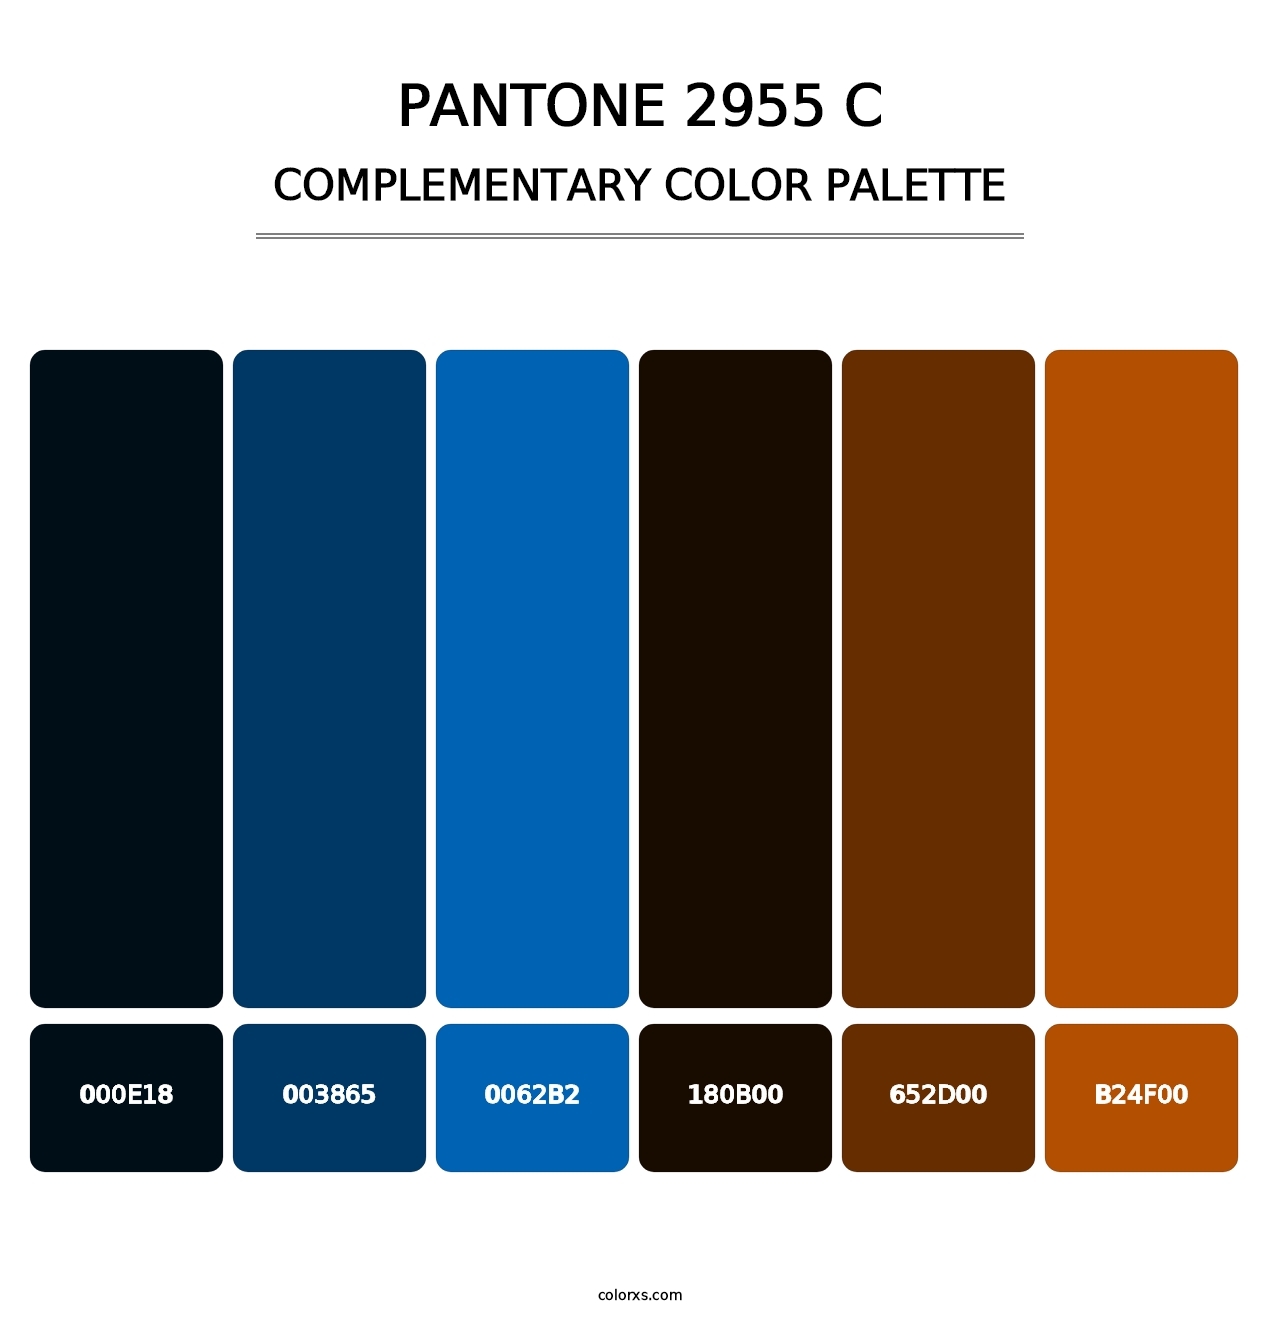 PANTONE 2955 C - Complementary Color Palette